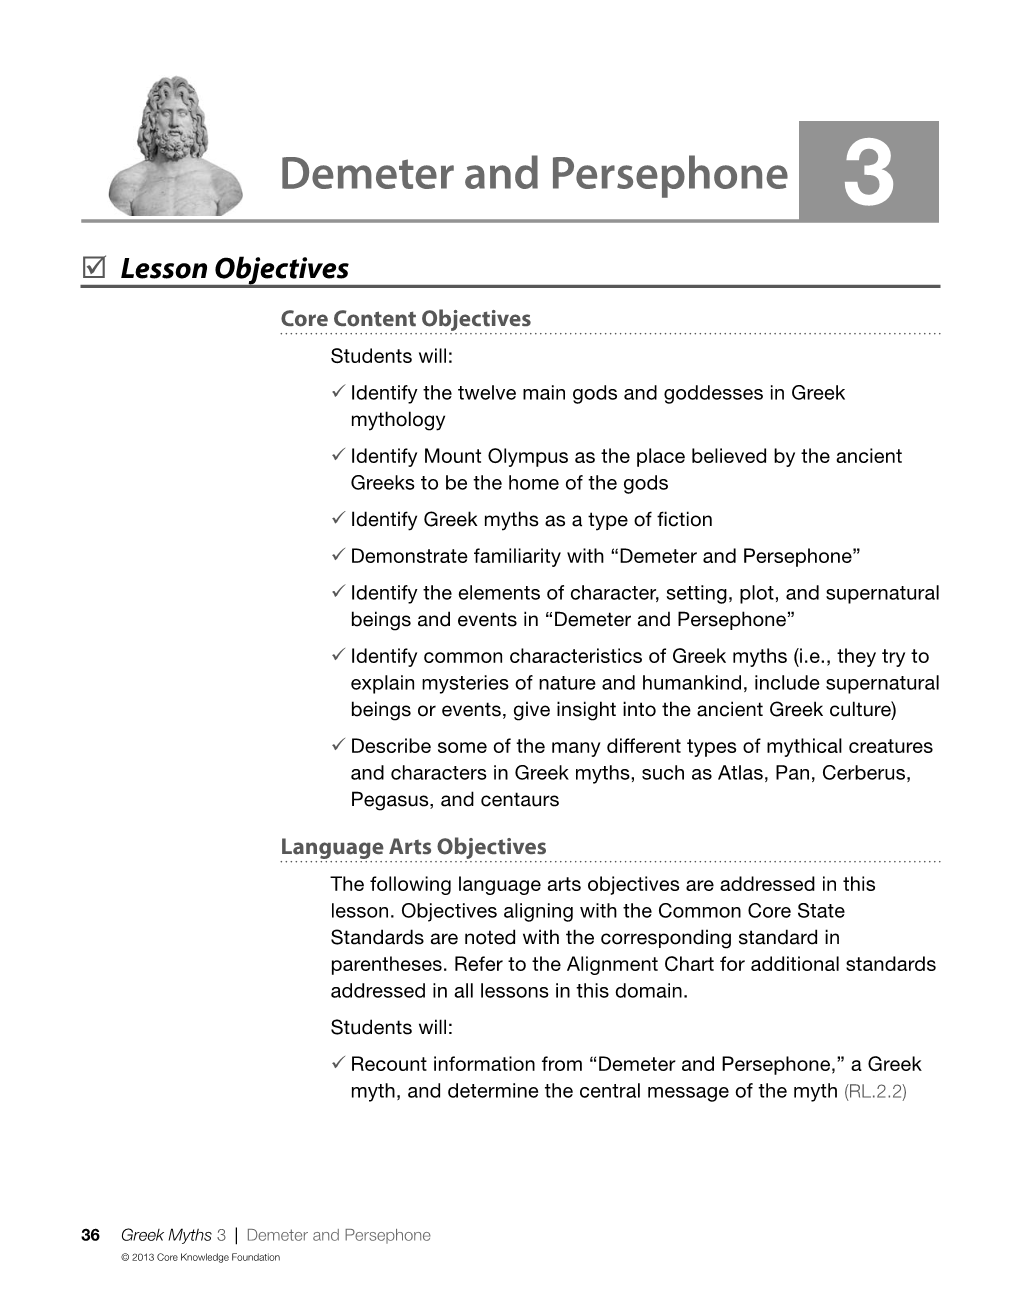 Demeter and Persephone 3